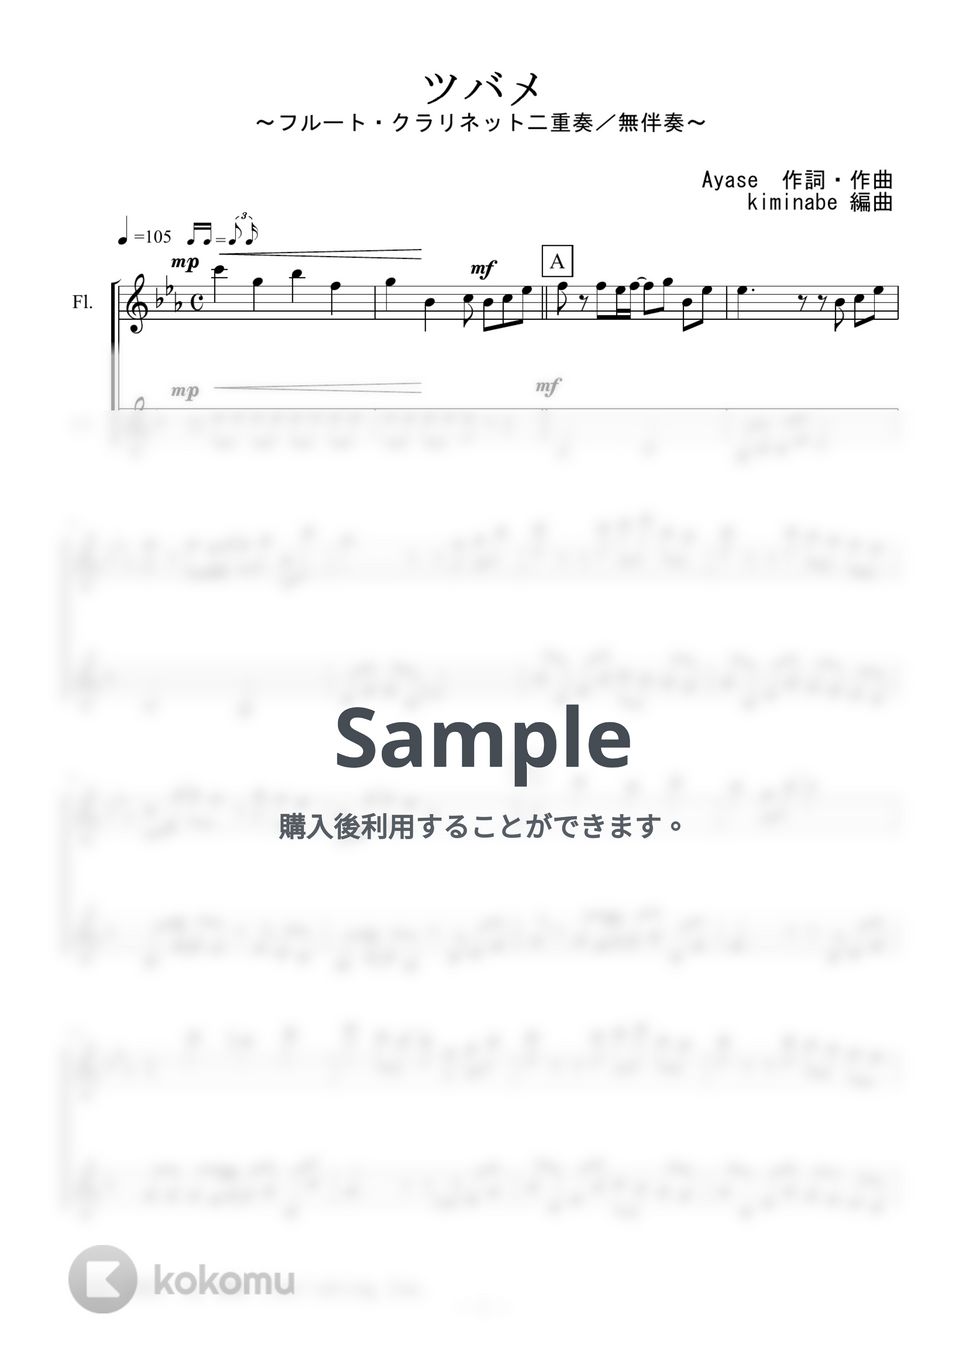 YOASOBI - ツバメ (フルート・クラリネット二重奏／無伴奏) by kiminabe